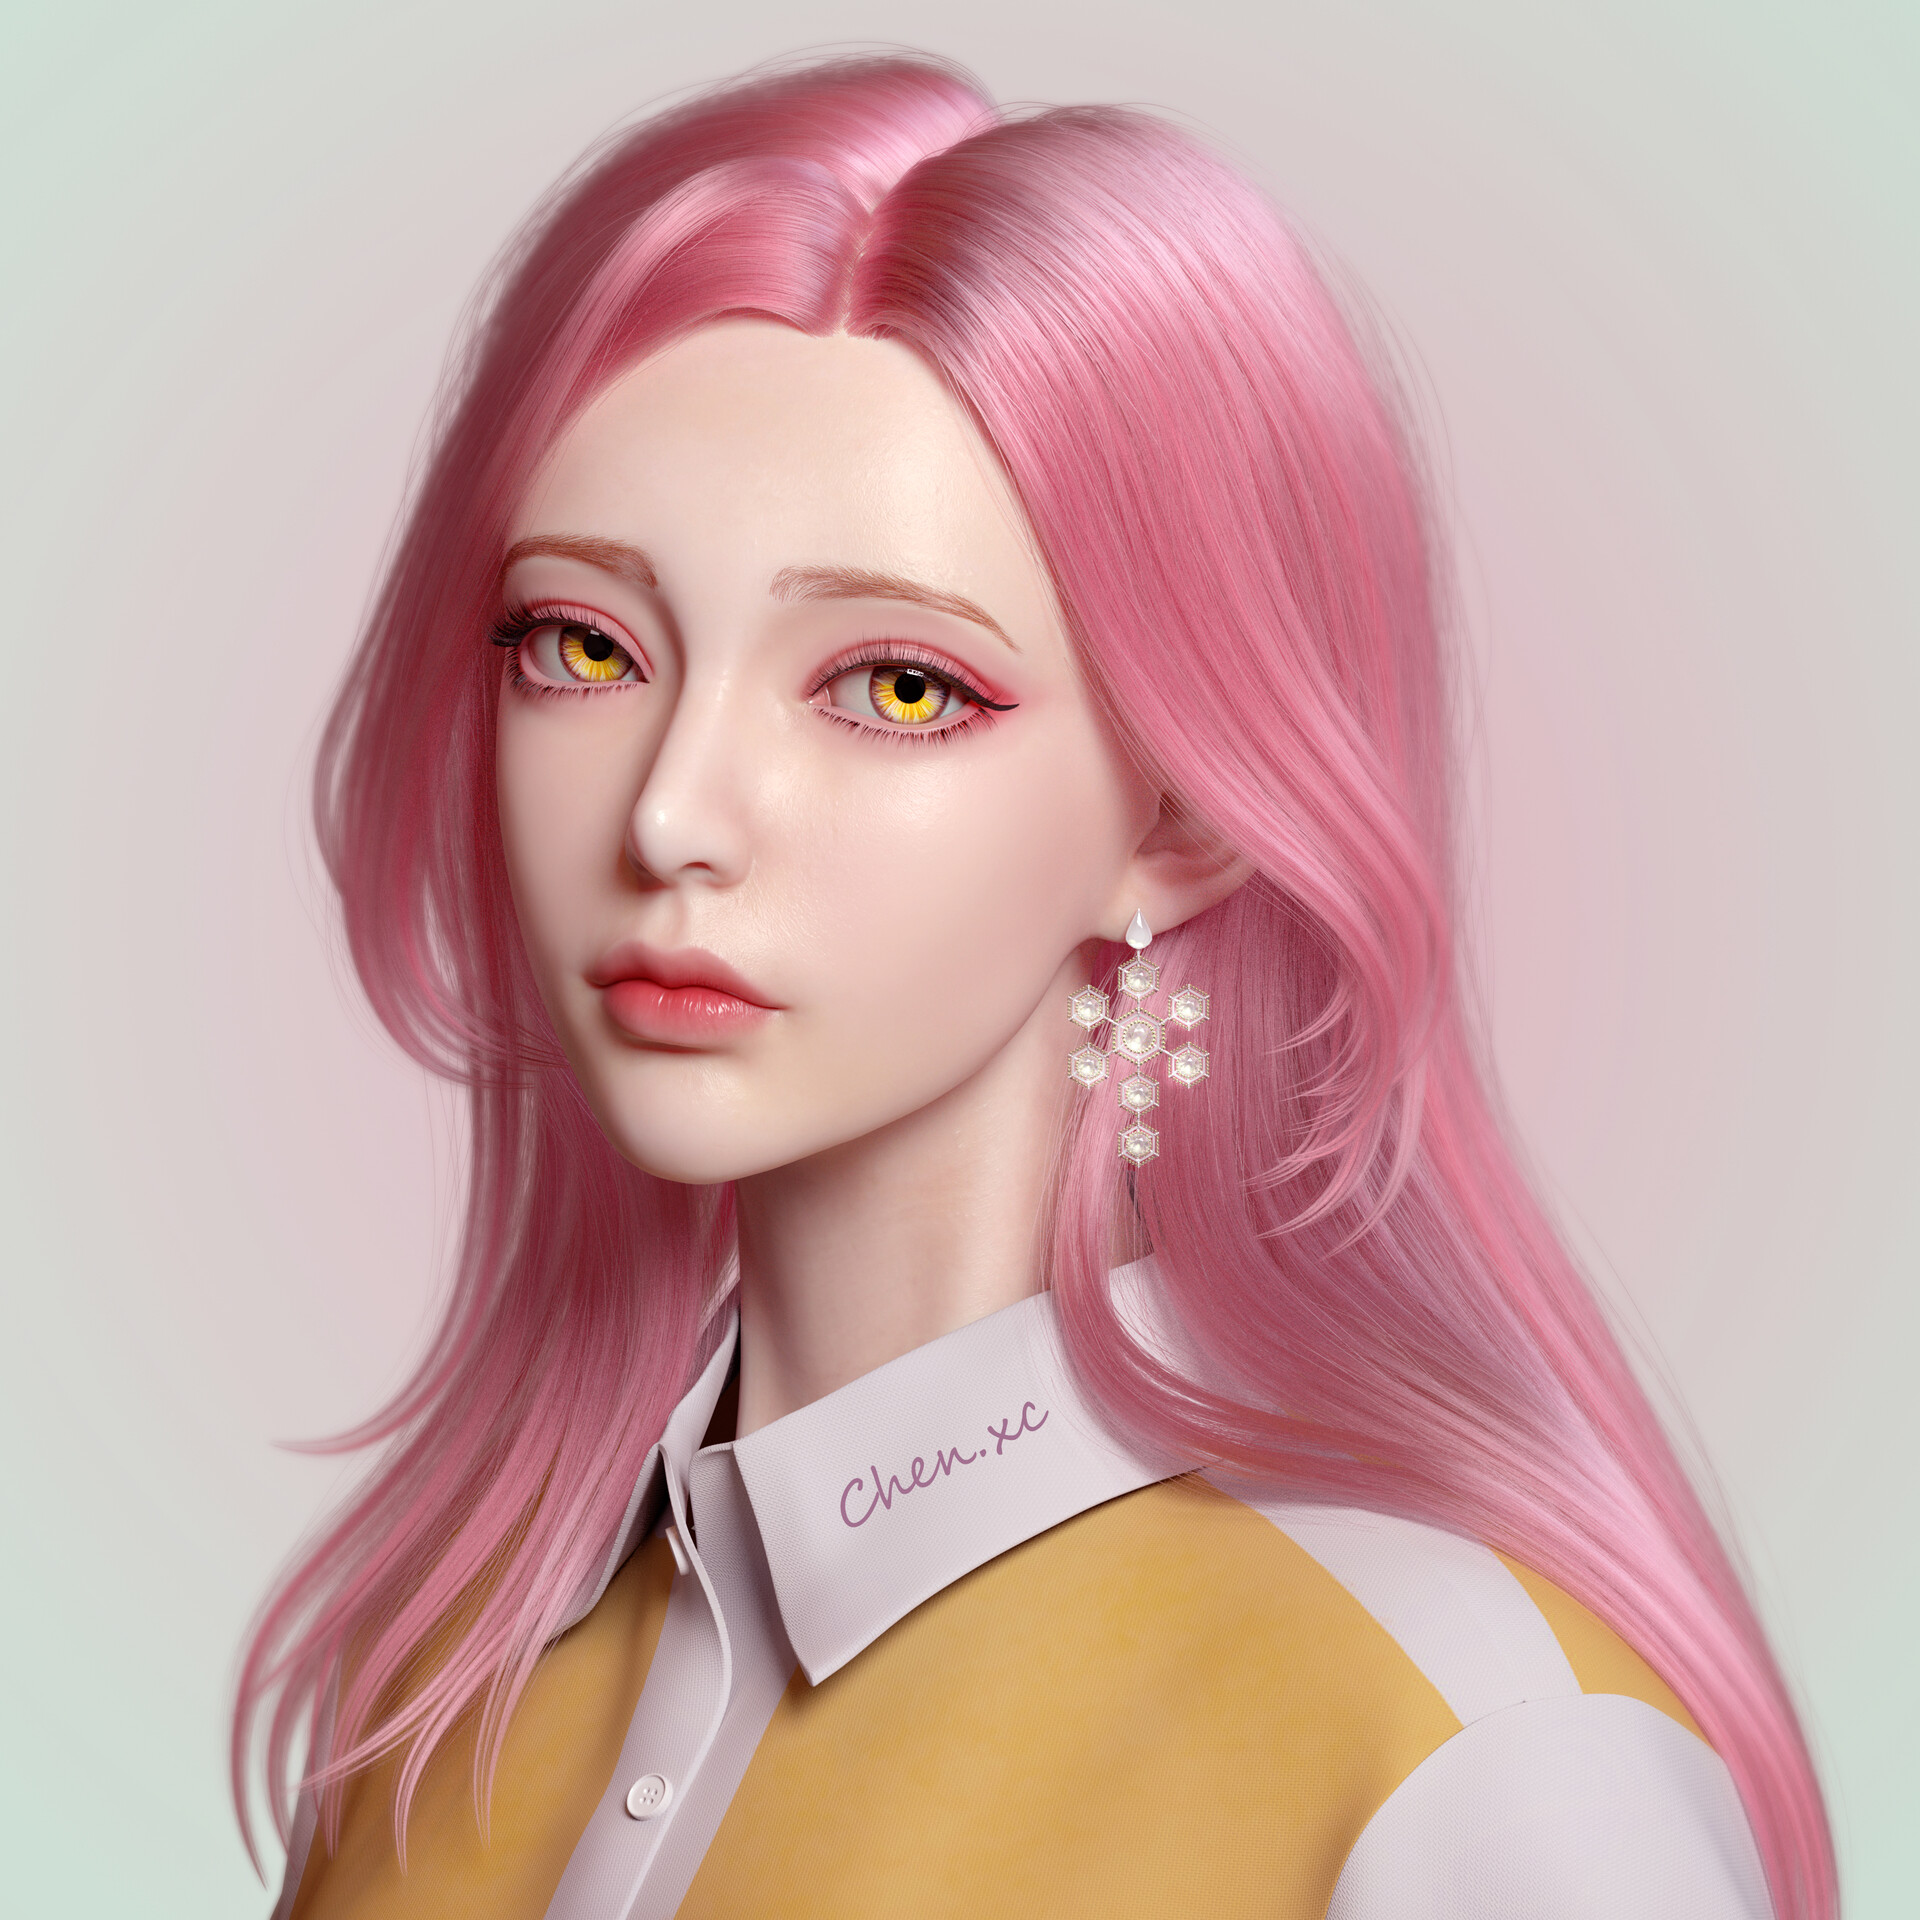 General 1920x1920 Xincheng Chen CGI women yellow eyes long hair makeup simple background pink hair fantasy girl